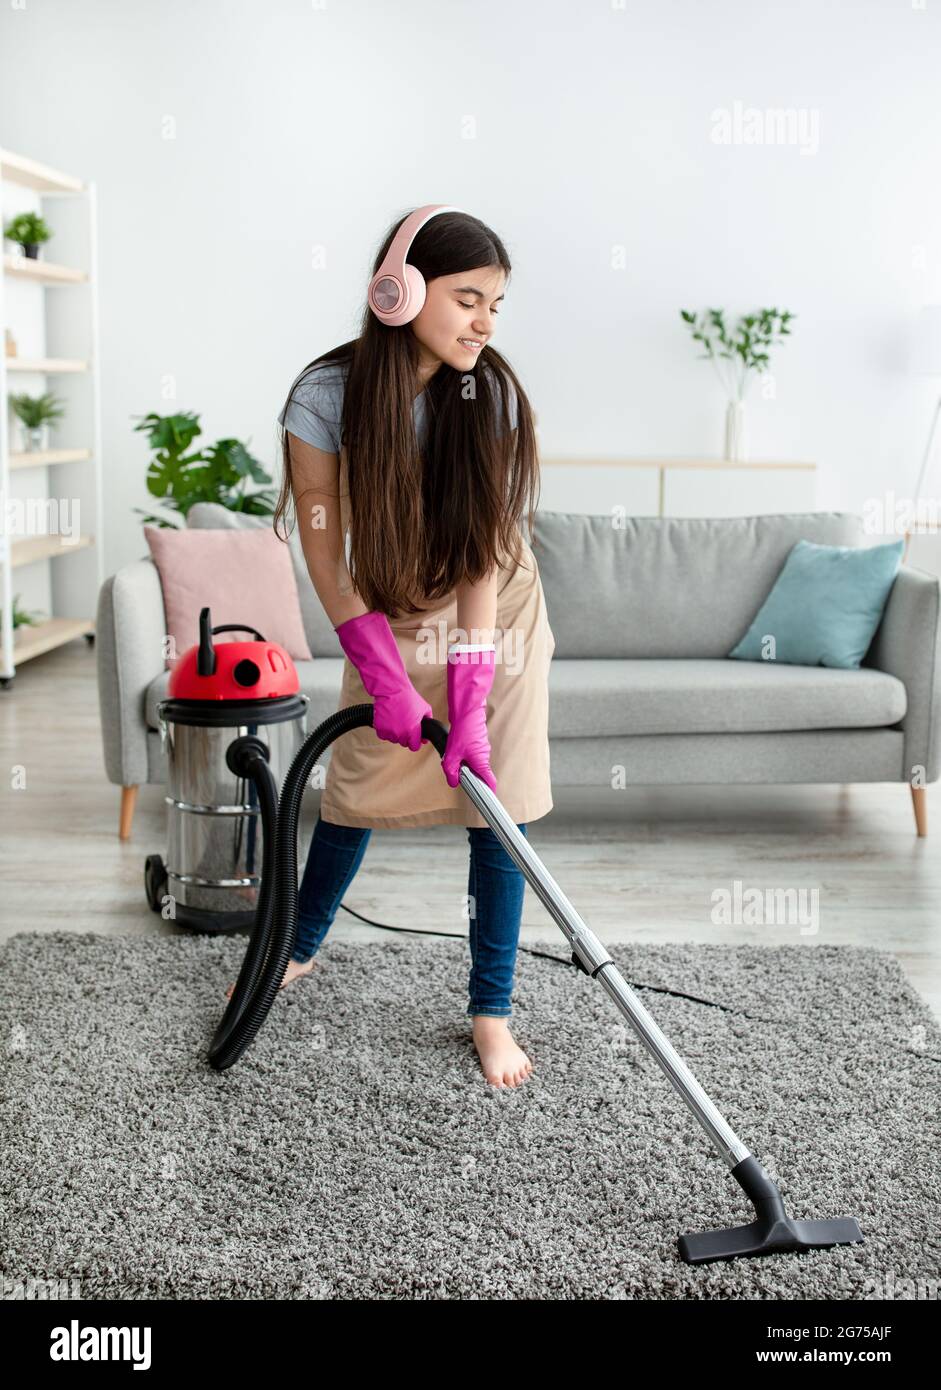 Cleaning with pleasure. Indian teenage girl vacuuming floor at home, listening to favorite music, wearing headphones Stock Photo